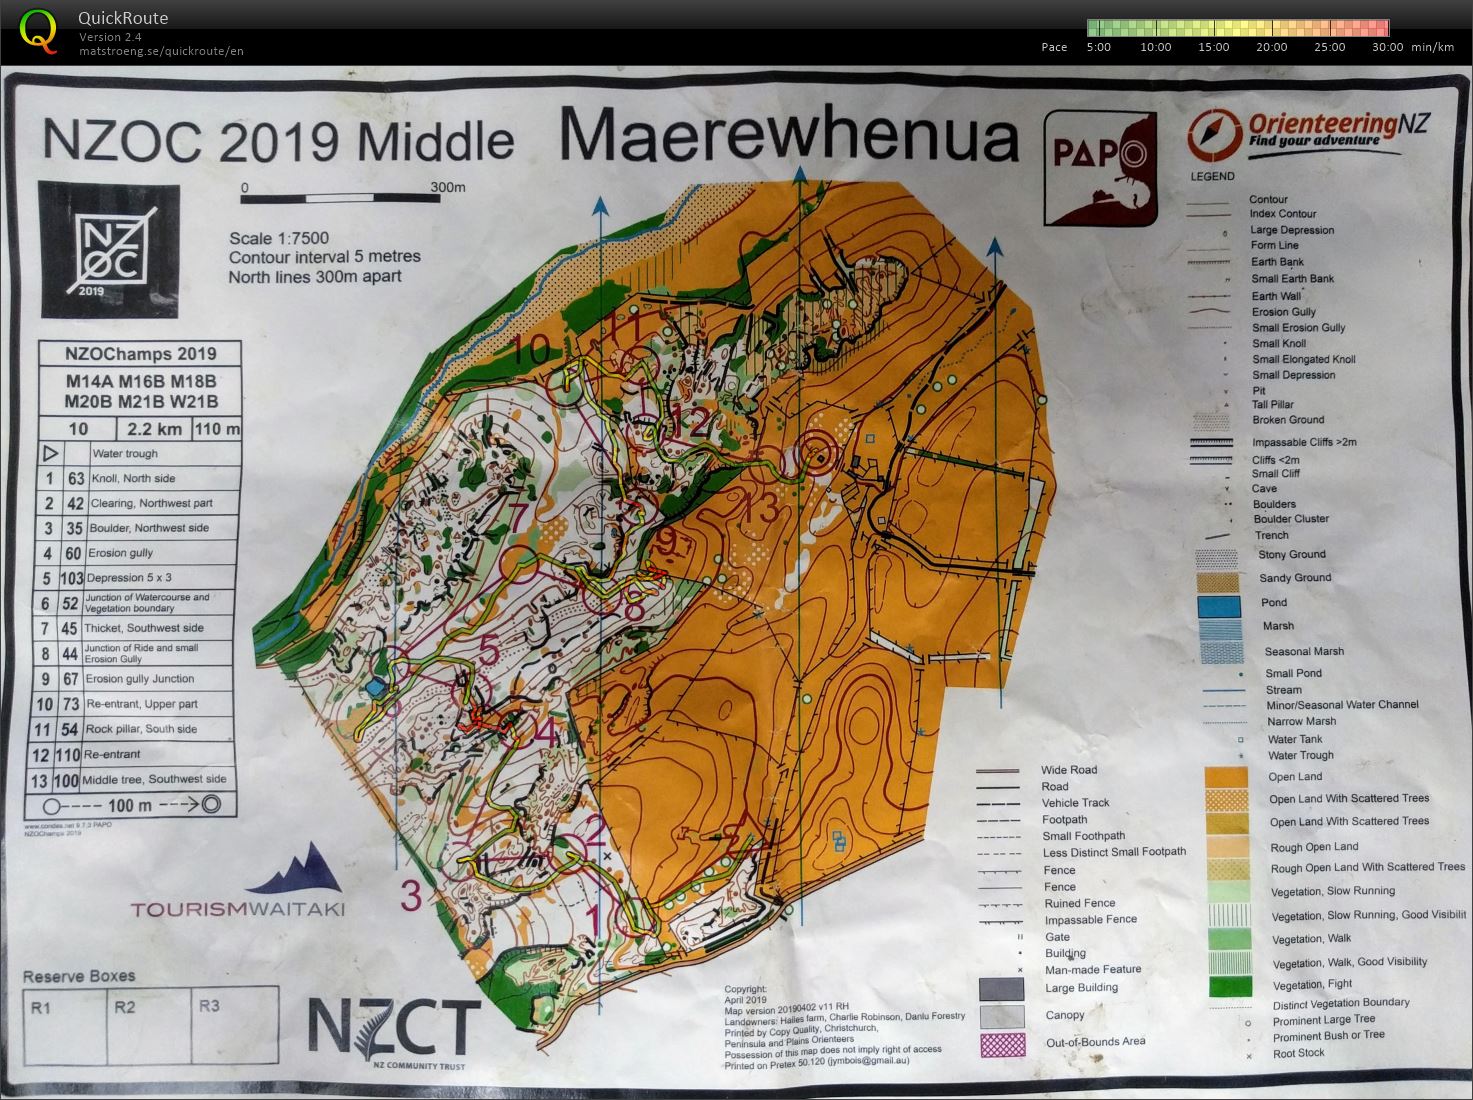 NZOC 2019 Middle Maerewhenua - W21B (21.04.2019)